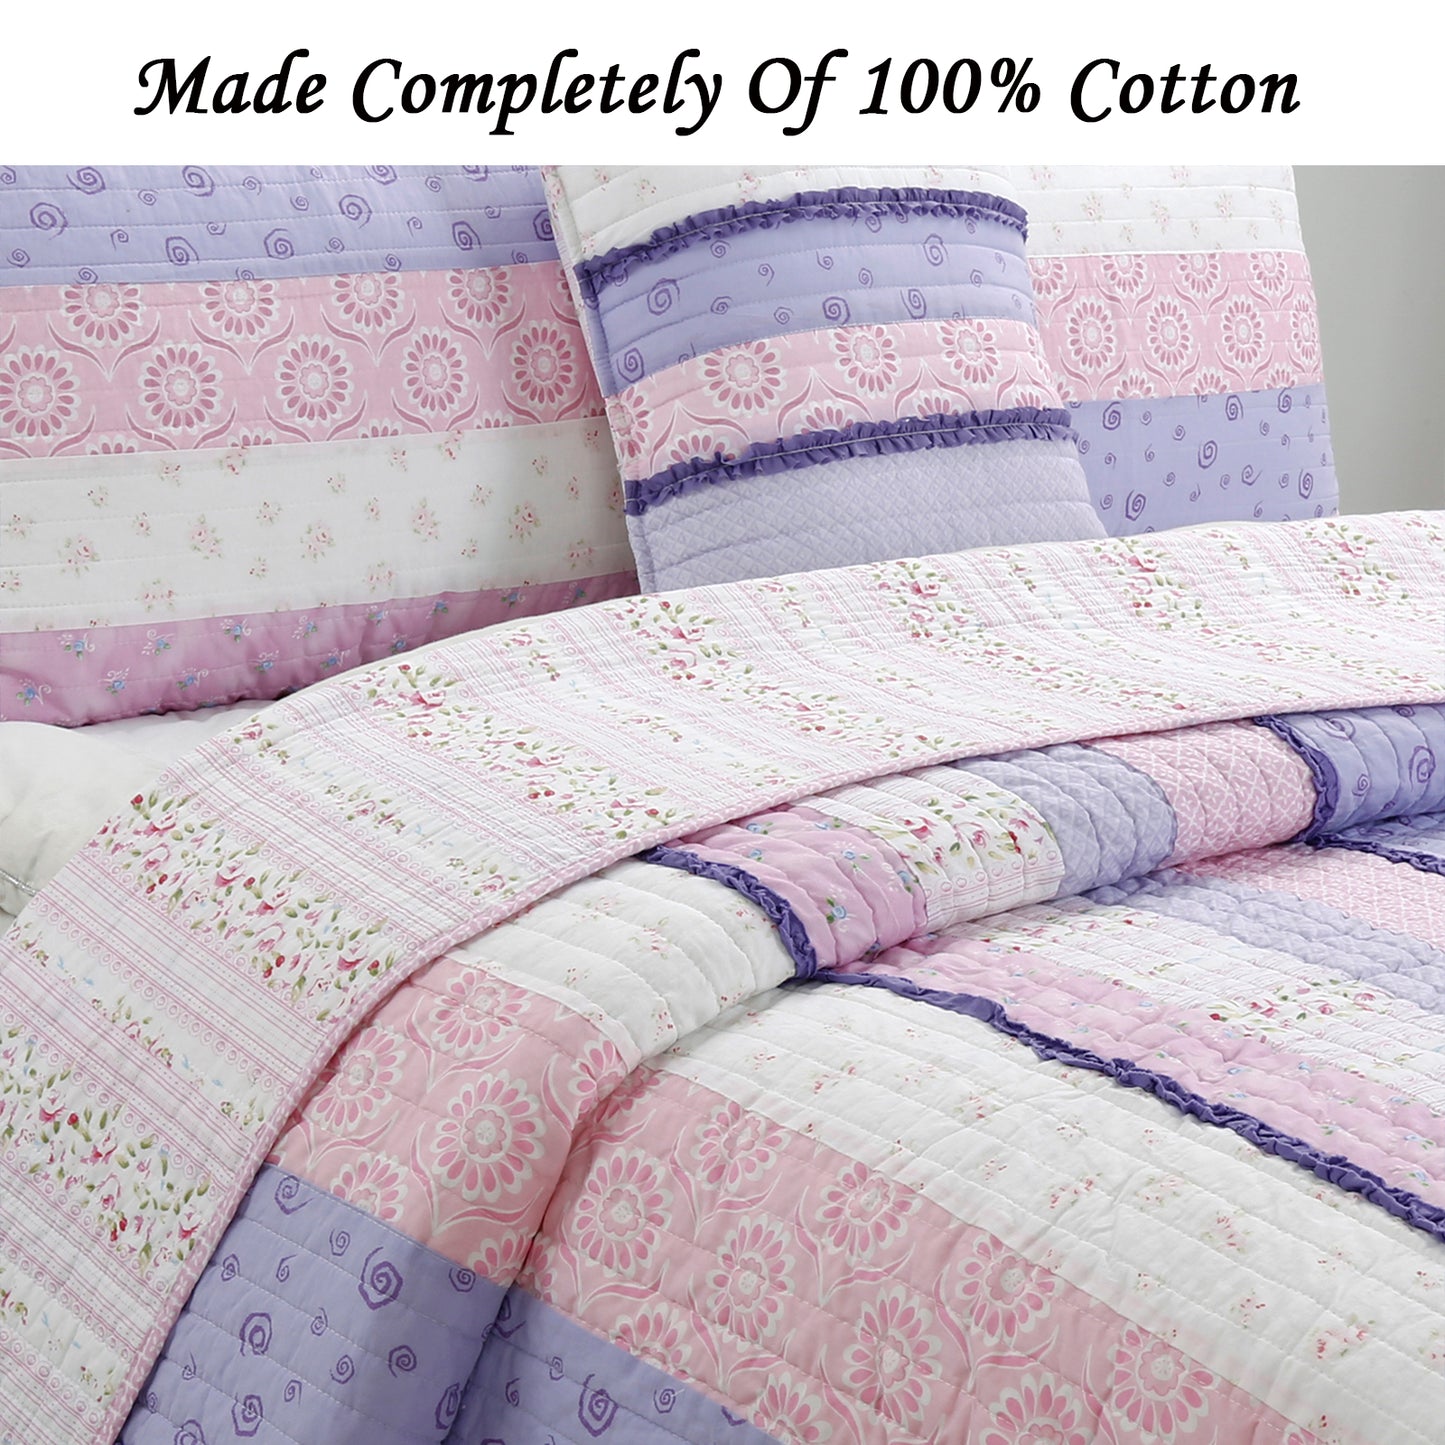 Fun Floral Ruffle Stripe Real Patchwork Pink Purple Cotton Reversible Quilt Bedding Set